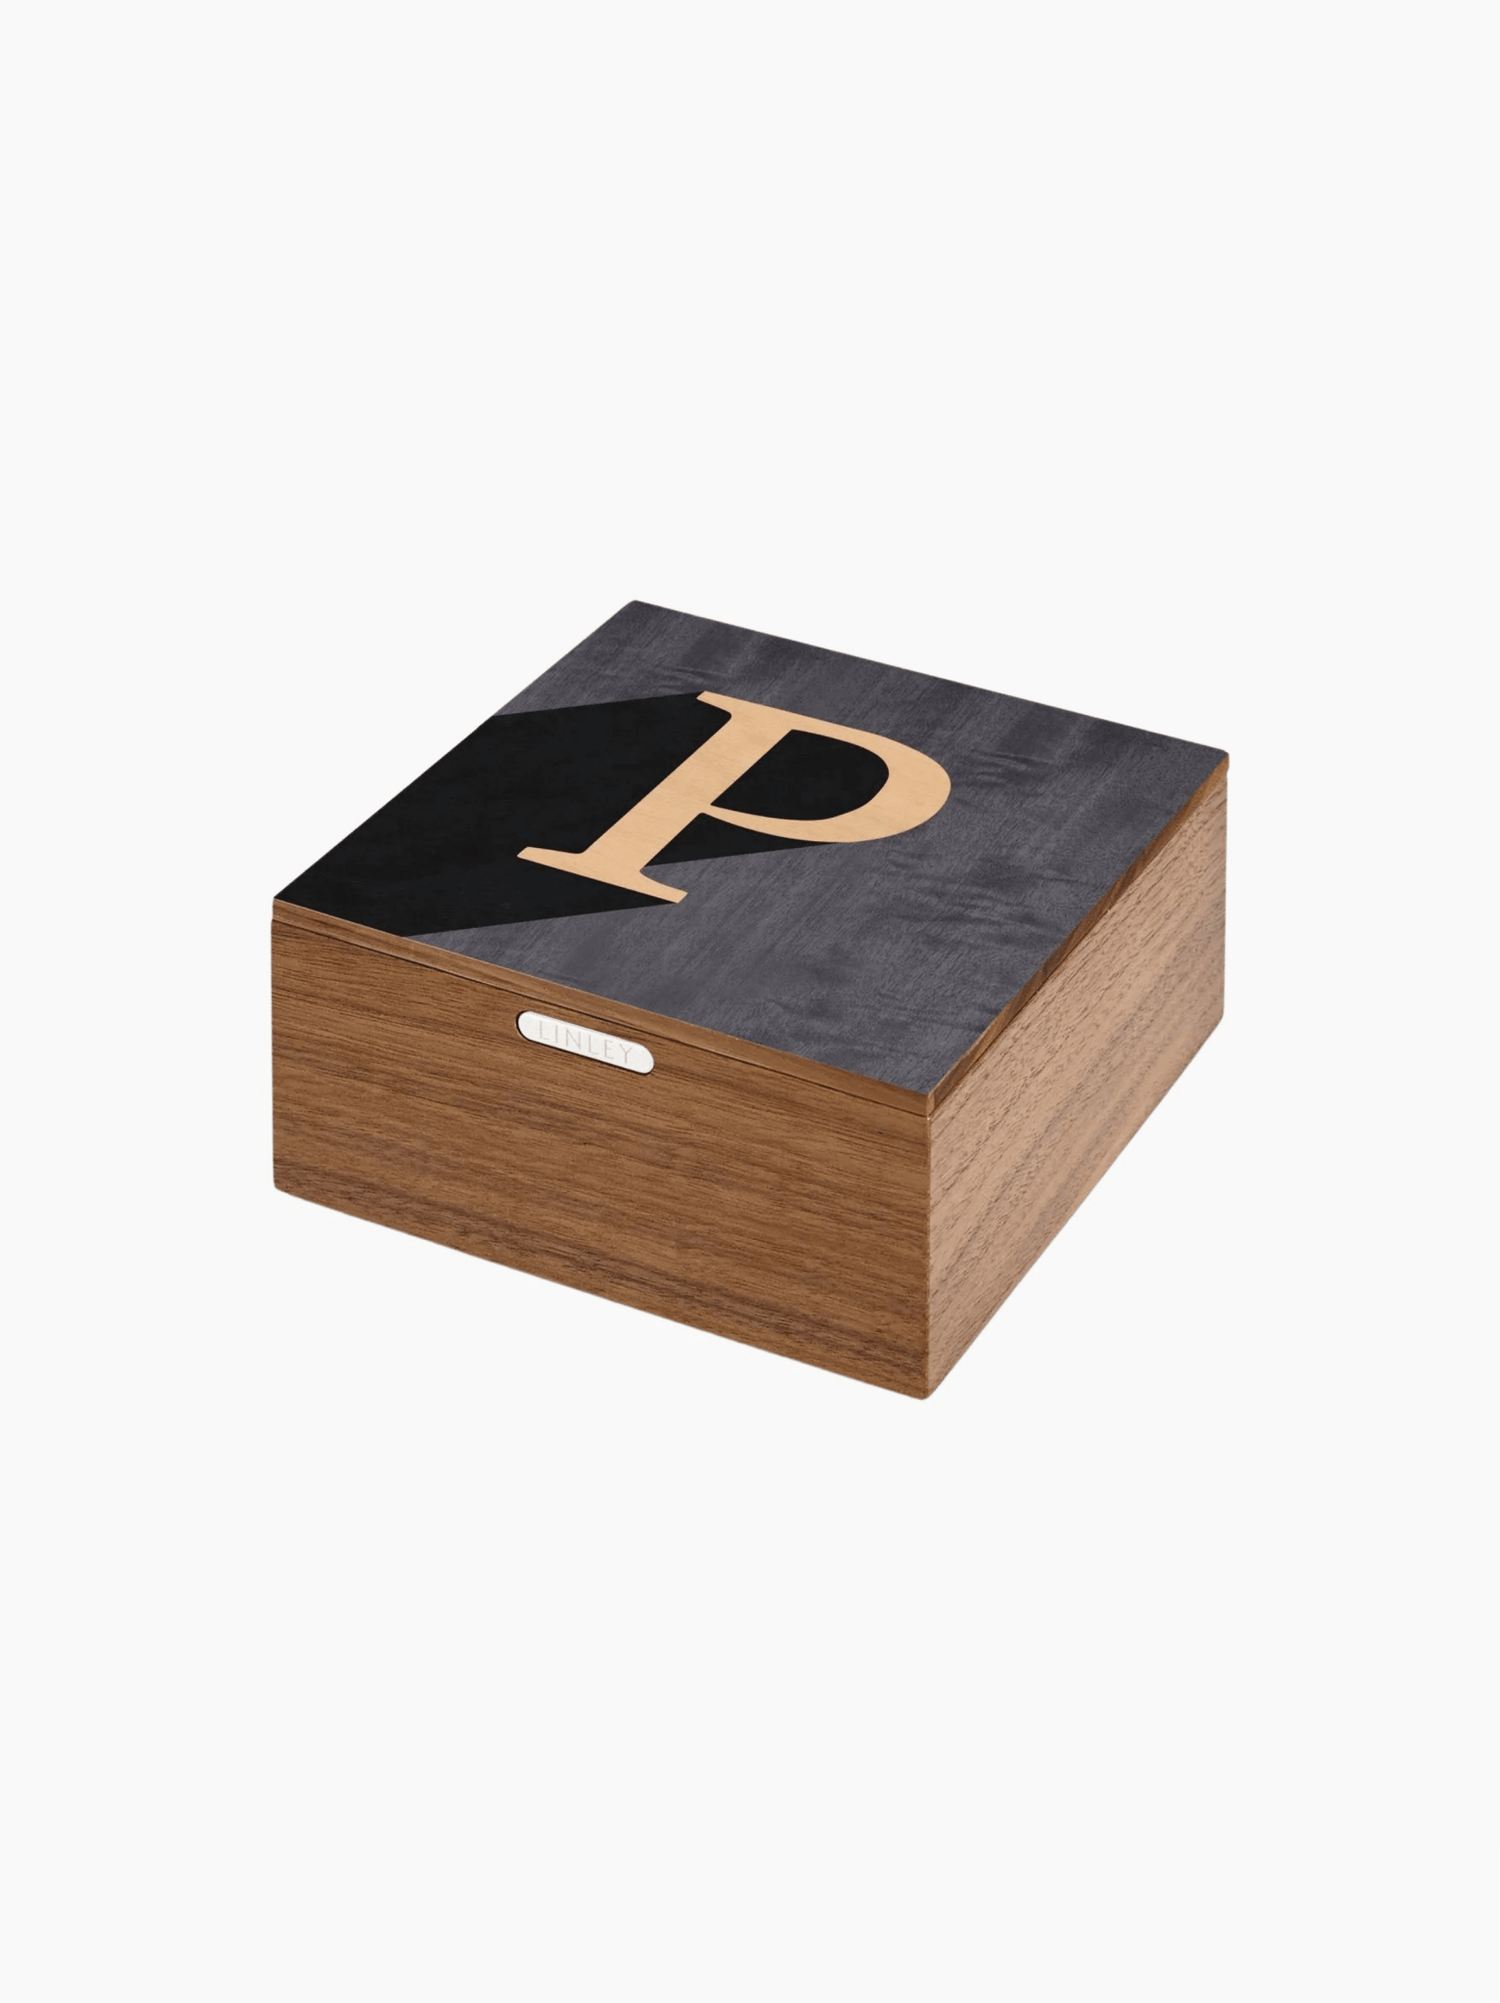 "P" Alphabet Box